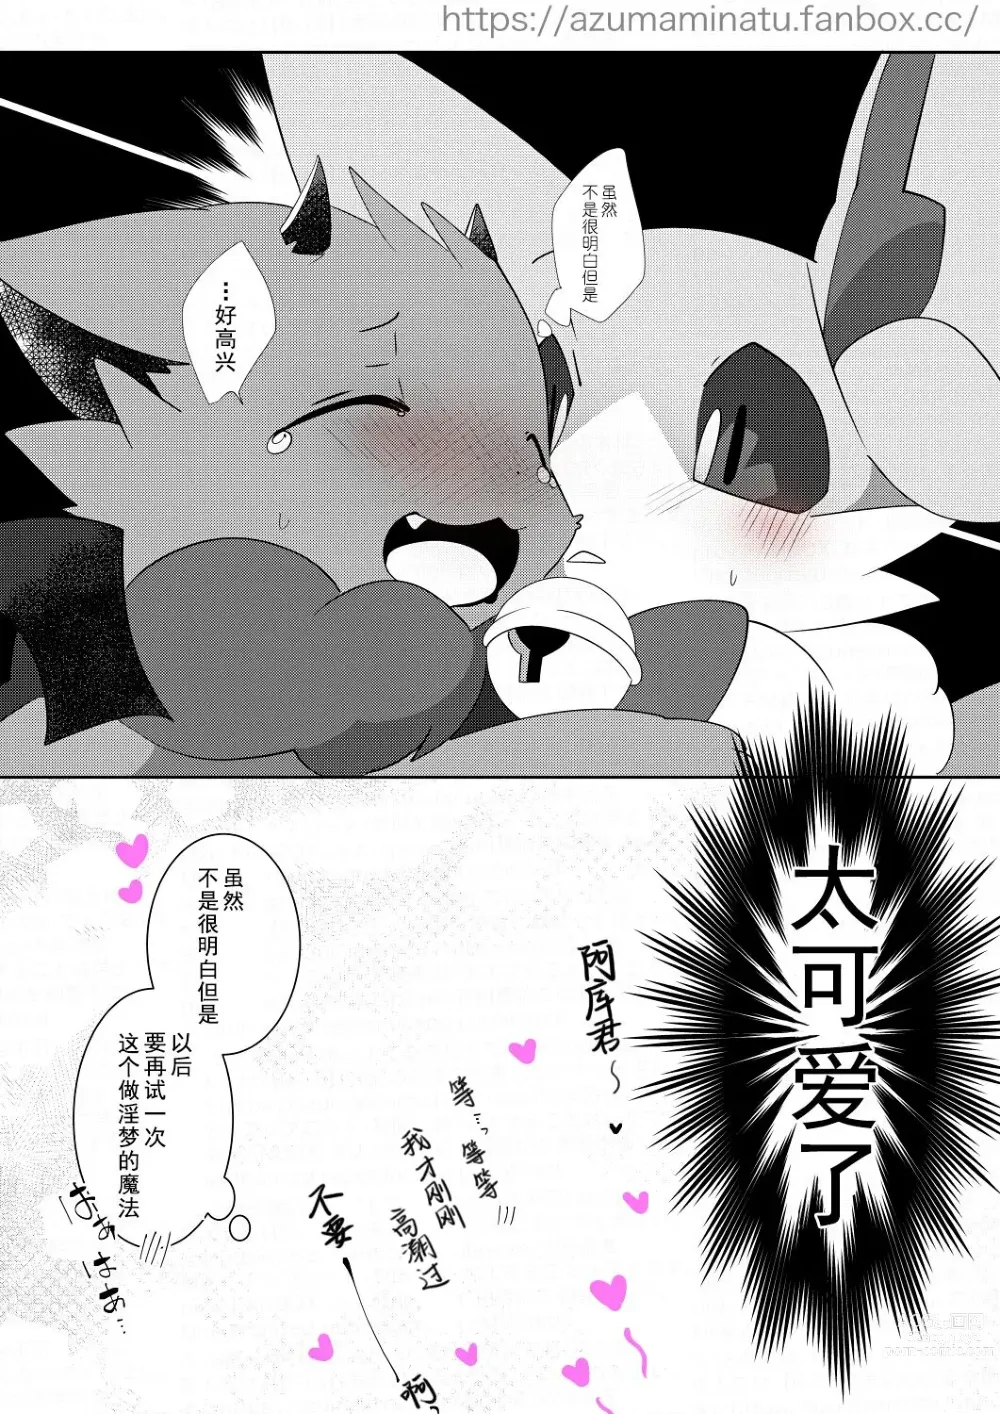 Page 6 of doujinshi 【Rｰ18】目が覚めたアクサン様の後日談